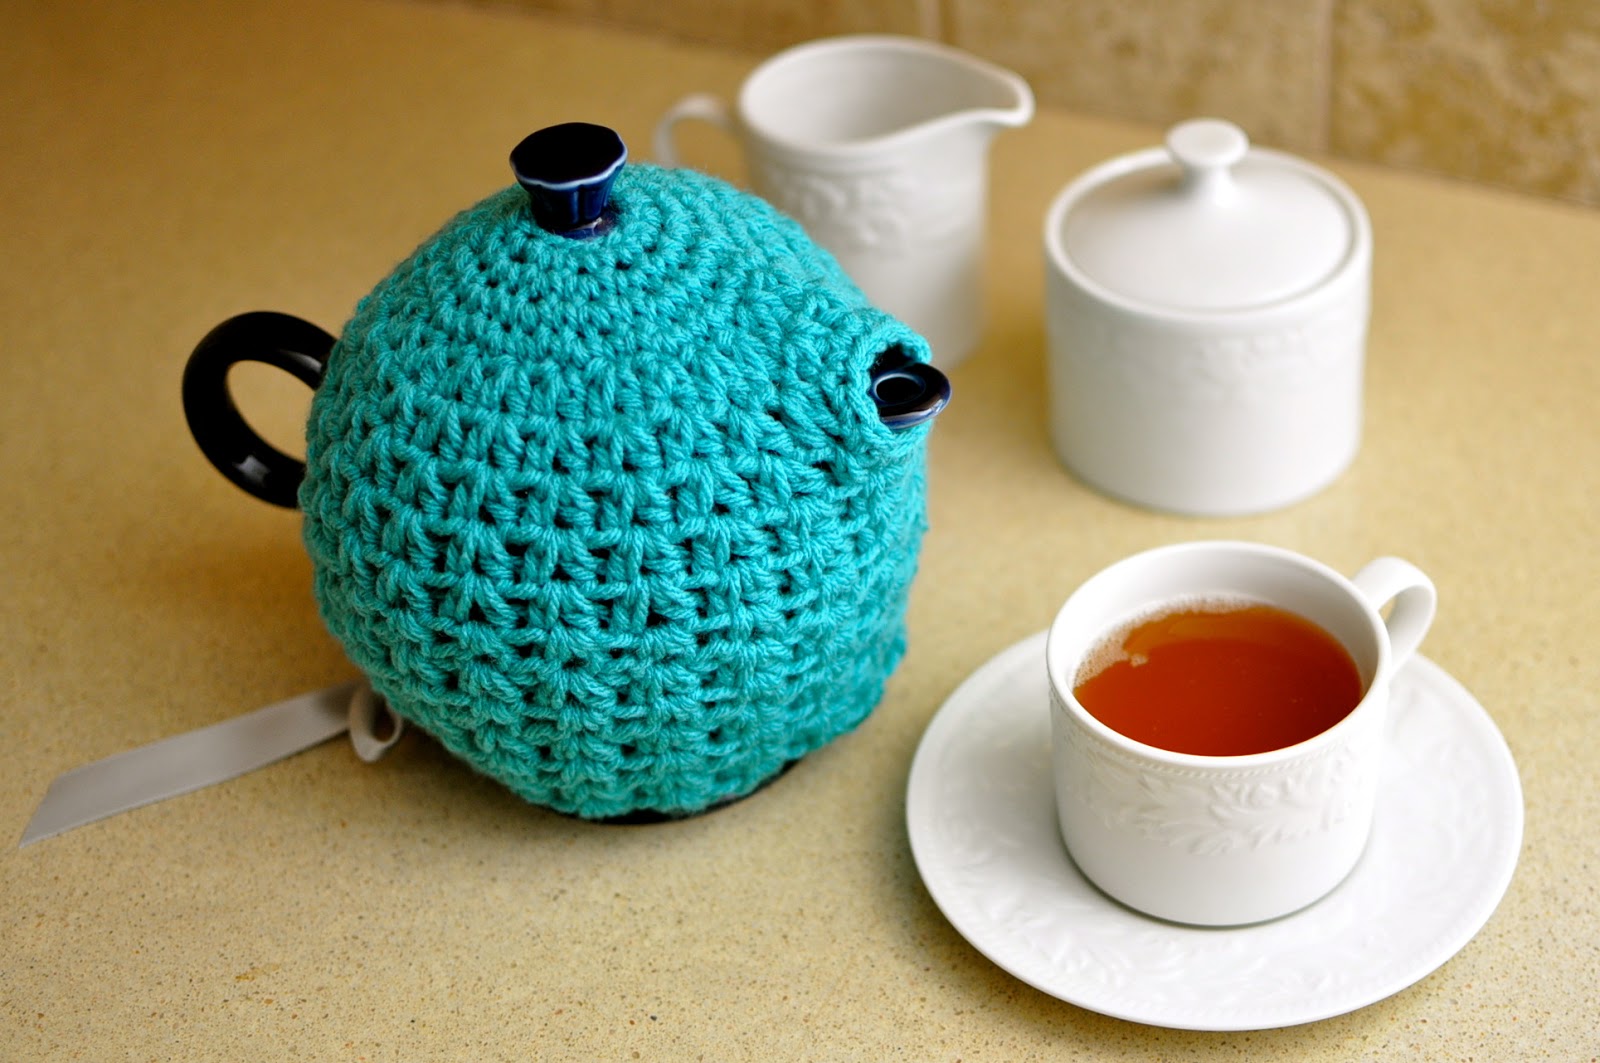 Nice and easy tea cozy